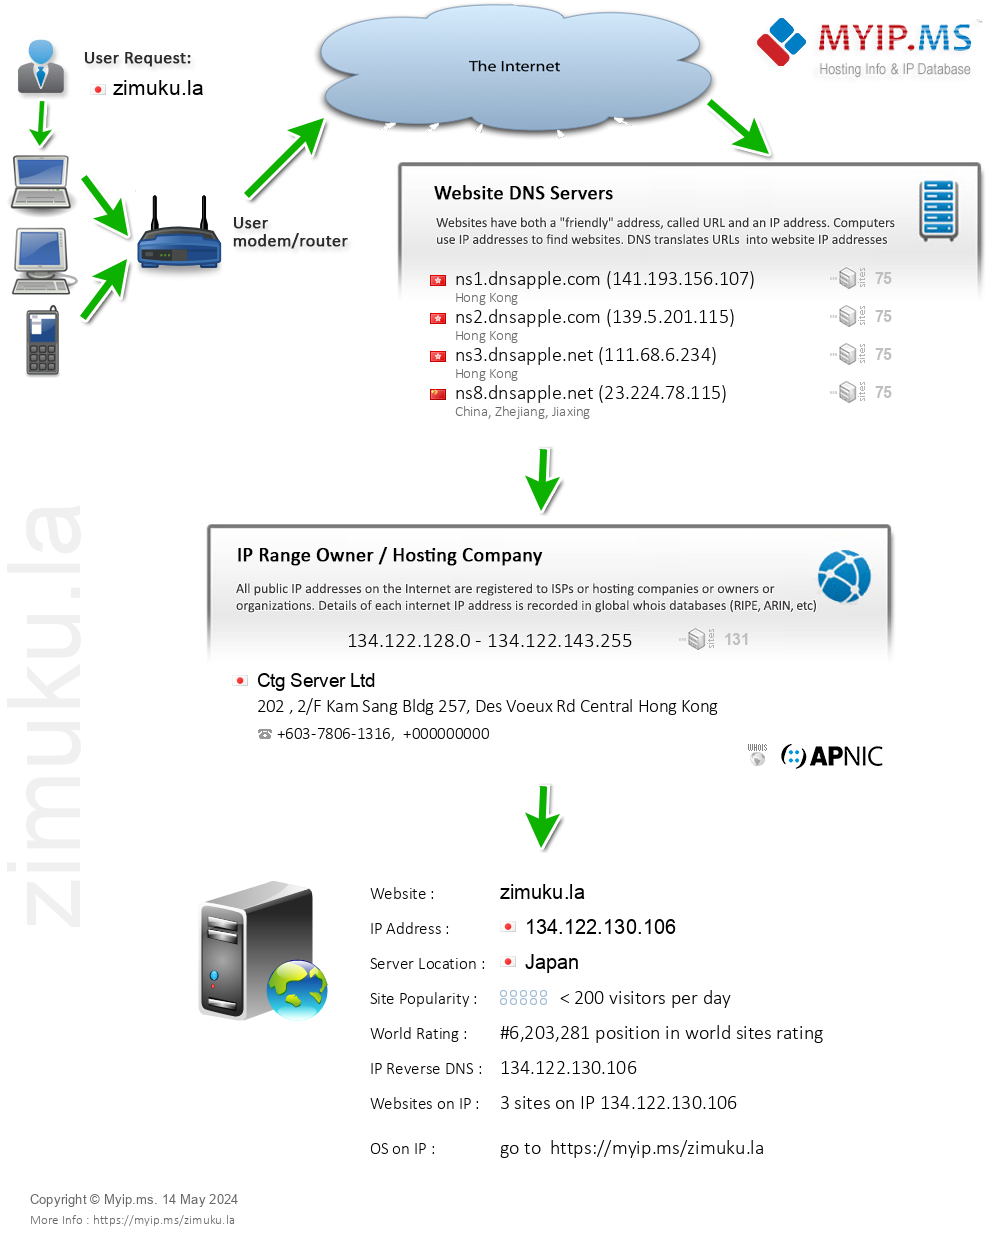 Zimuku.la - Website Hosting Visual IP Diagram